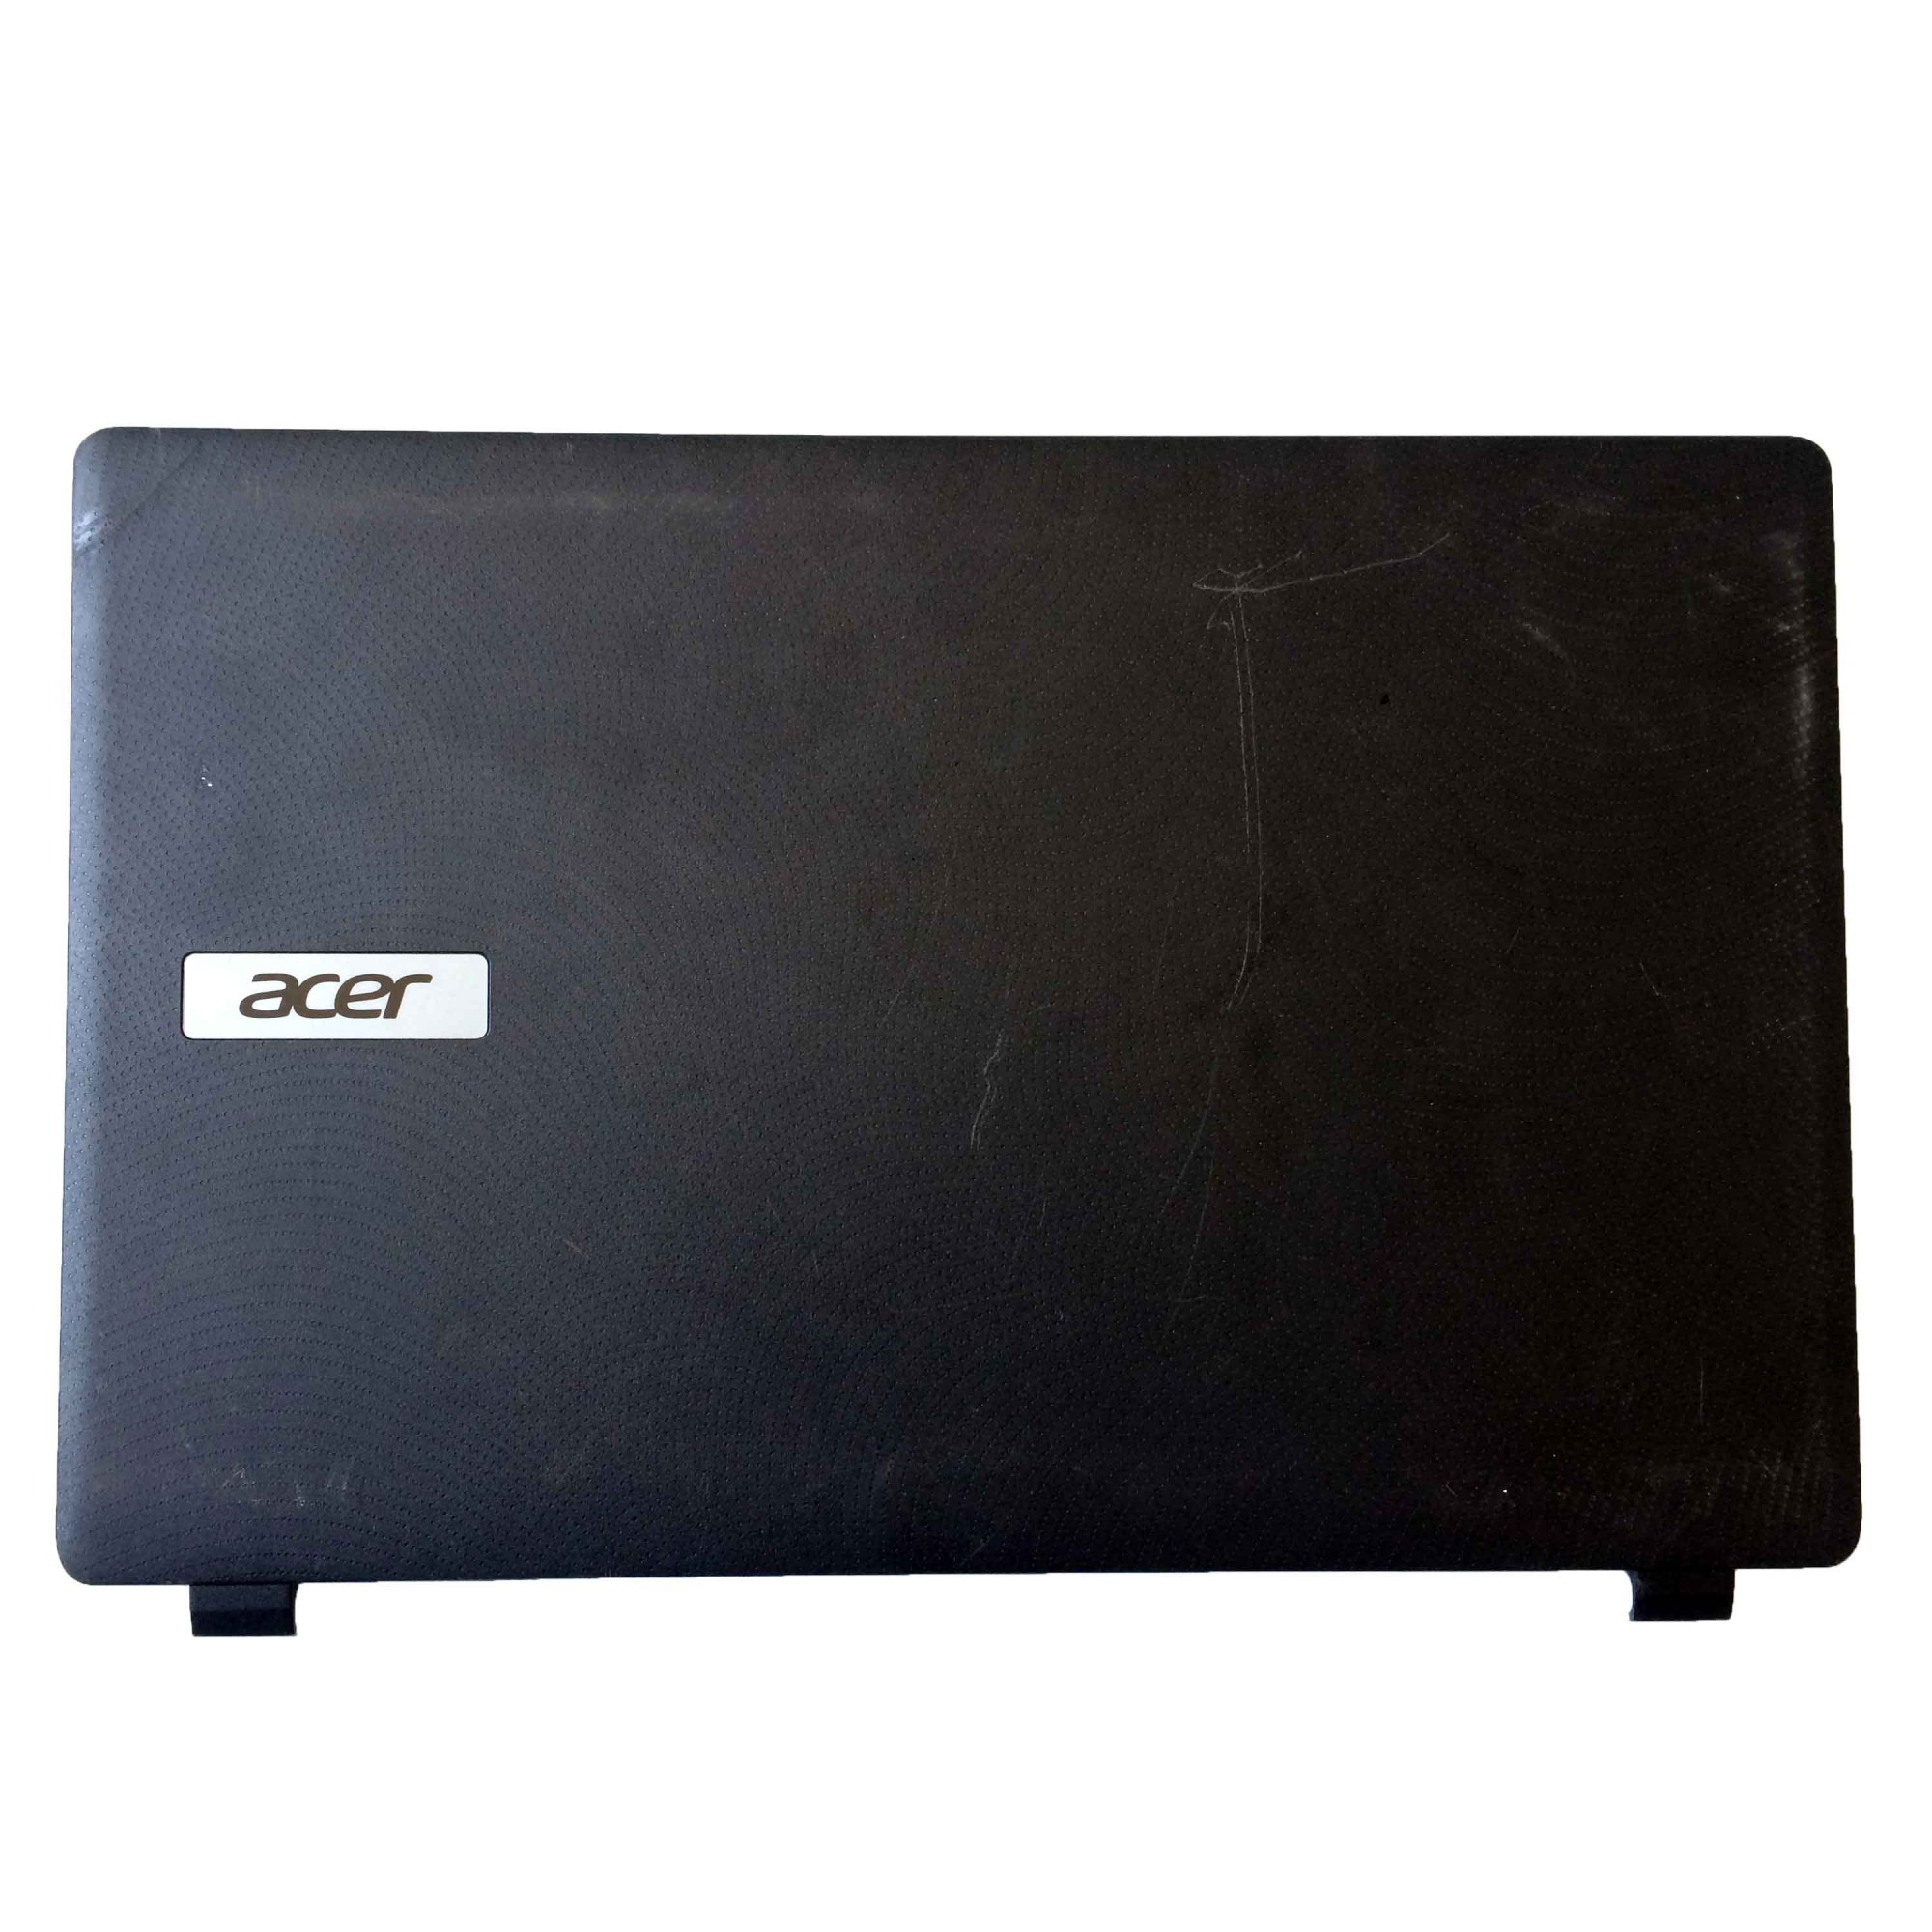 Carcaça Tampa LCD Notebook Acer Aspire ES1-512 PN:441.03703.1001 YLI4600370500111 HHE53-BNB01-B02A0 - Retirado